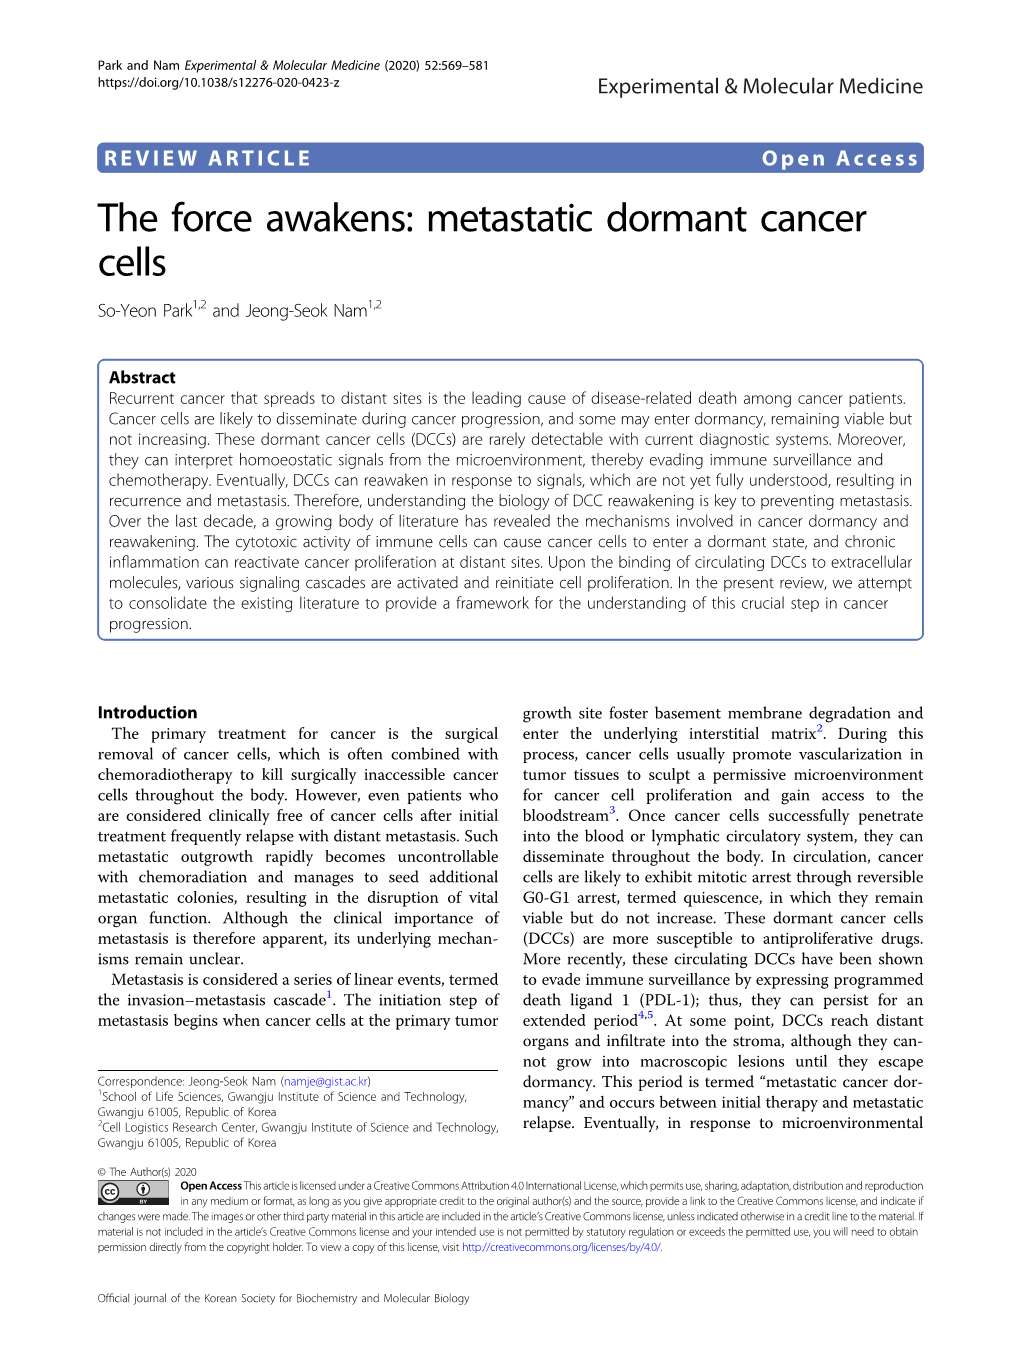 Metastatic Dormant Cancer Cells So-Yeon Park1,2 and Jeong-Seok Nam1,2